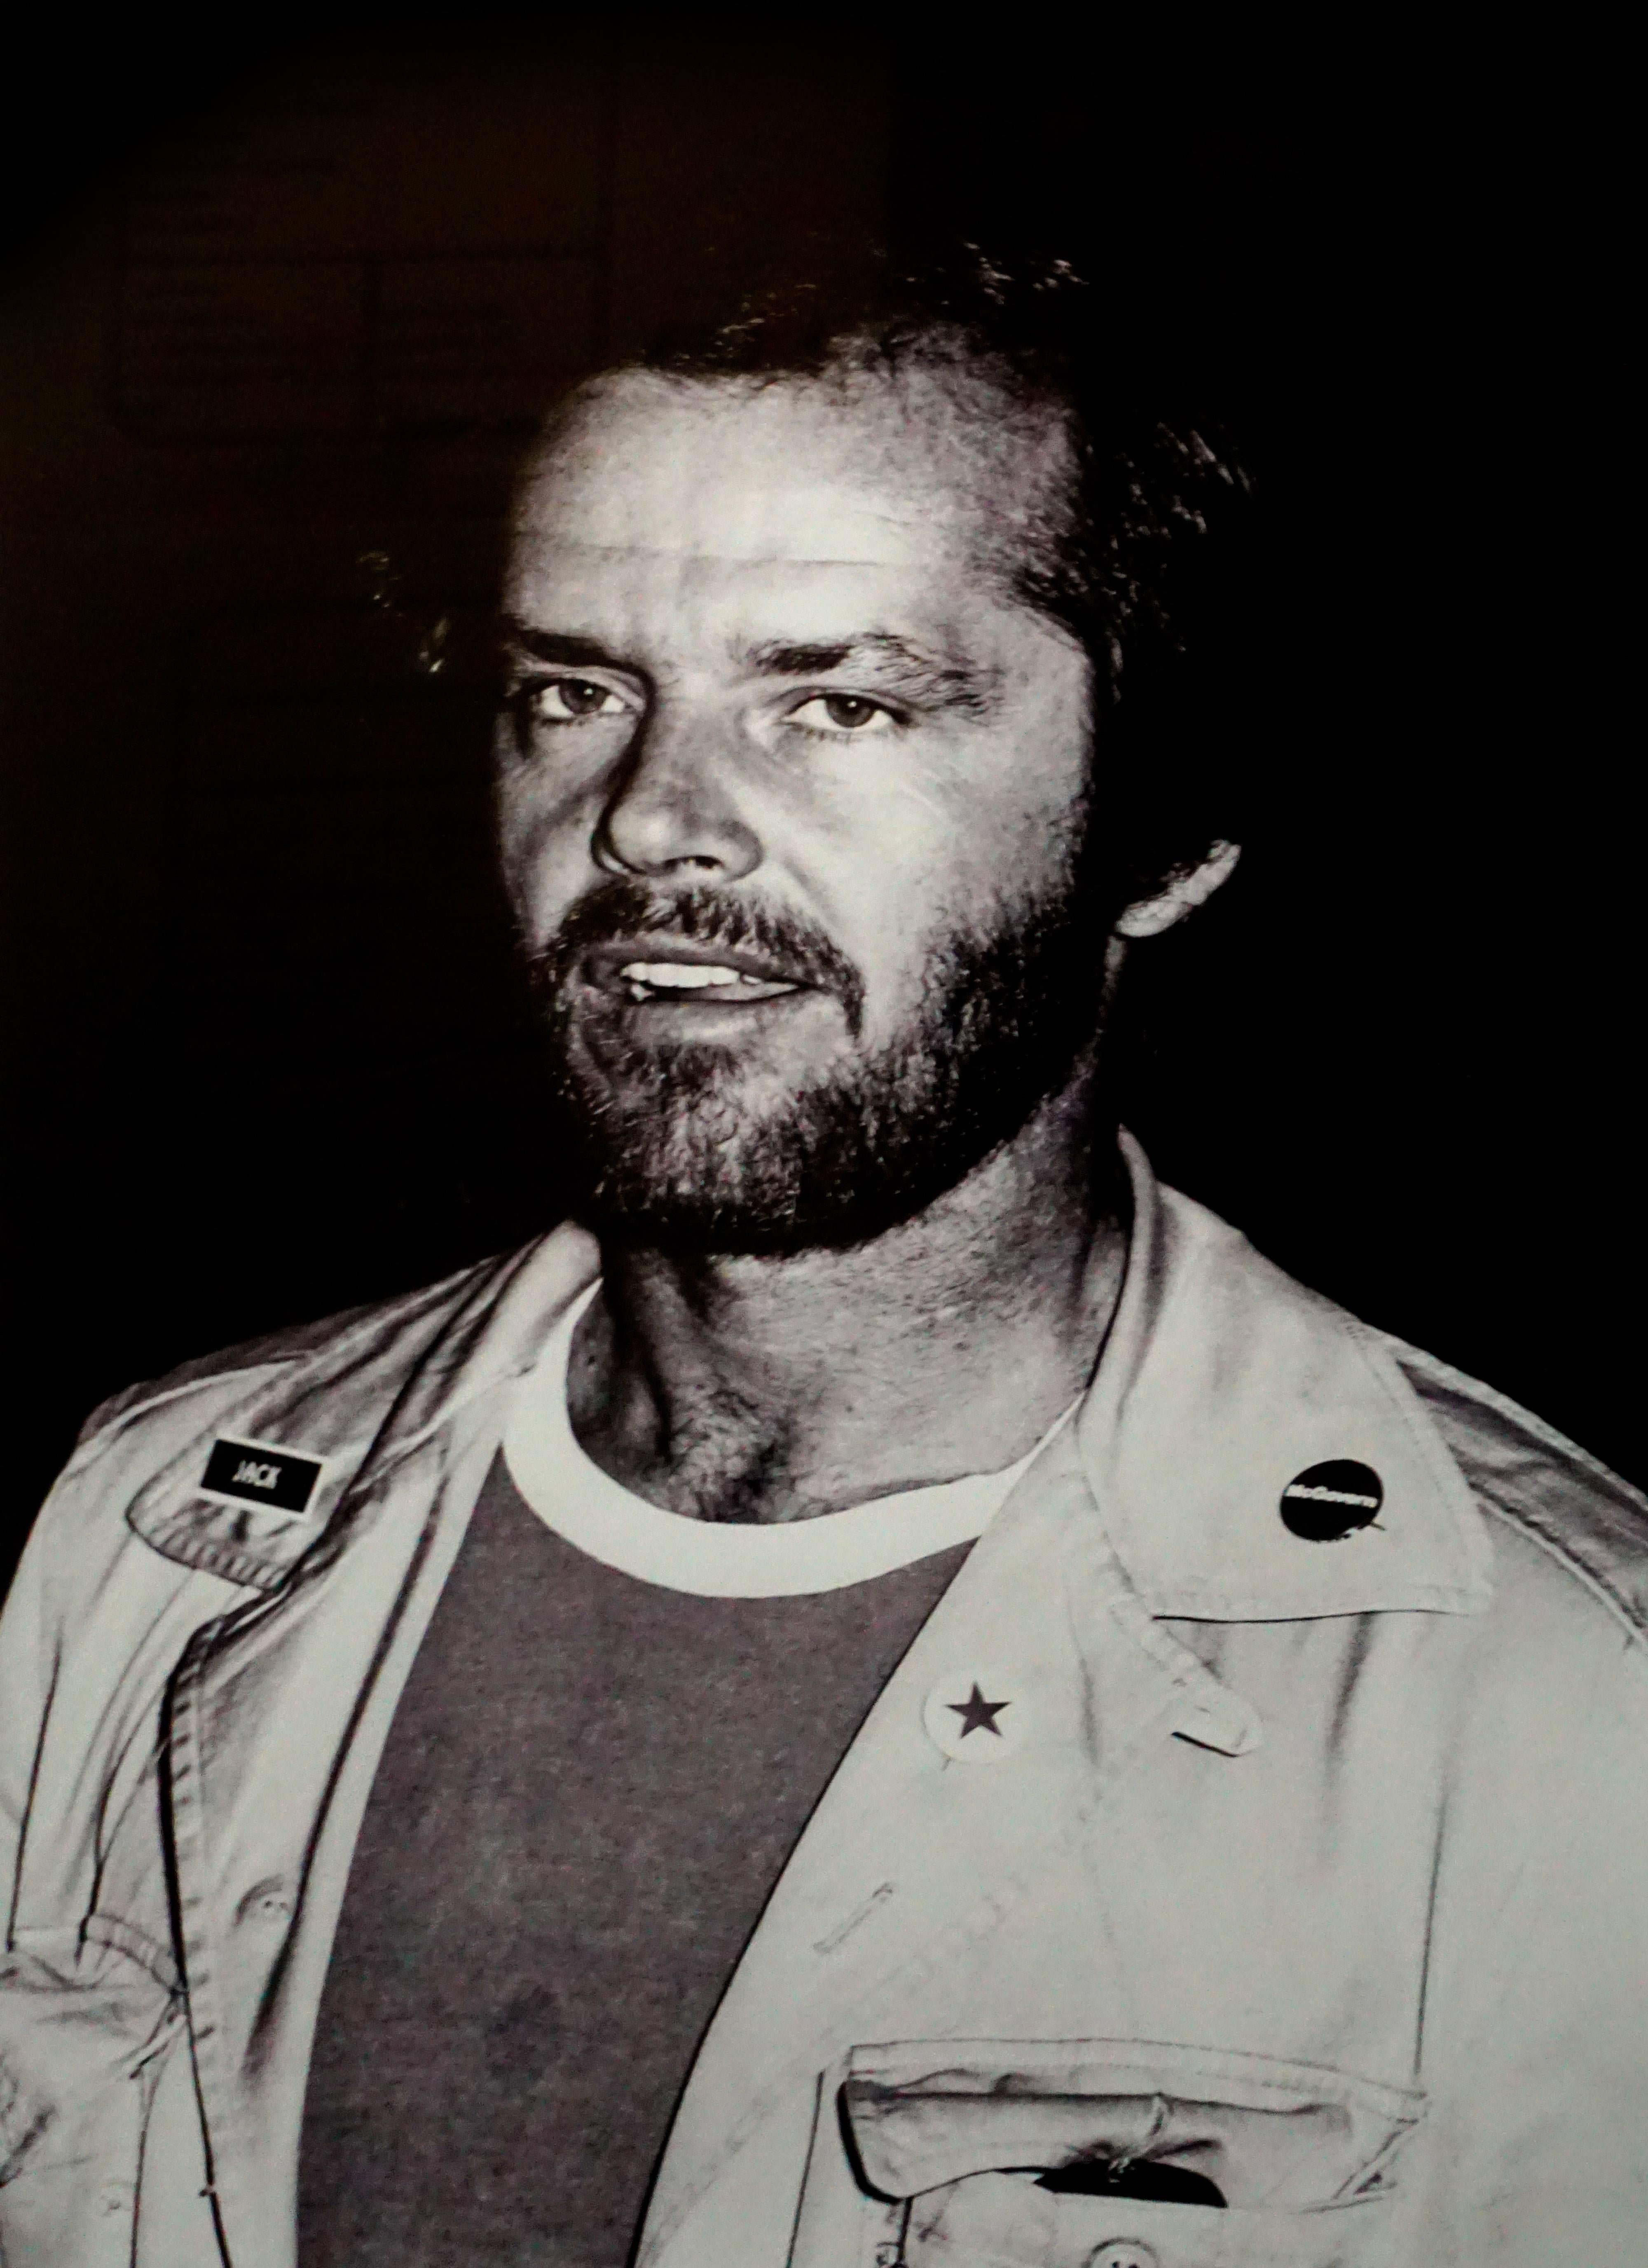 Jack Nicholson photograph from 1972 - Photograph by Lynn Goldsmith